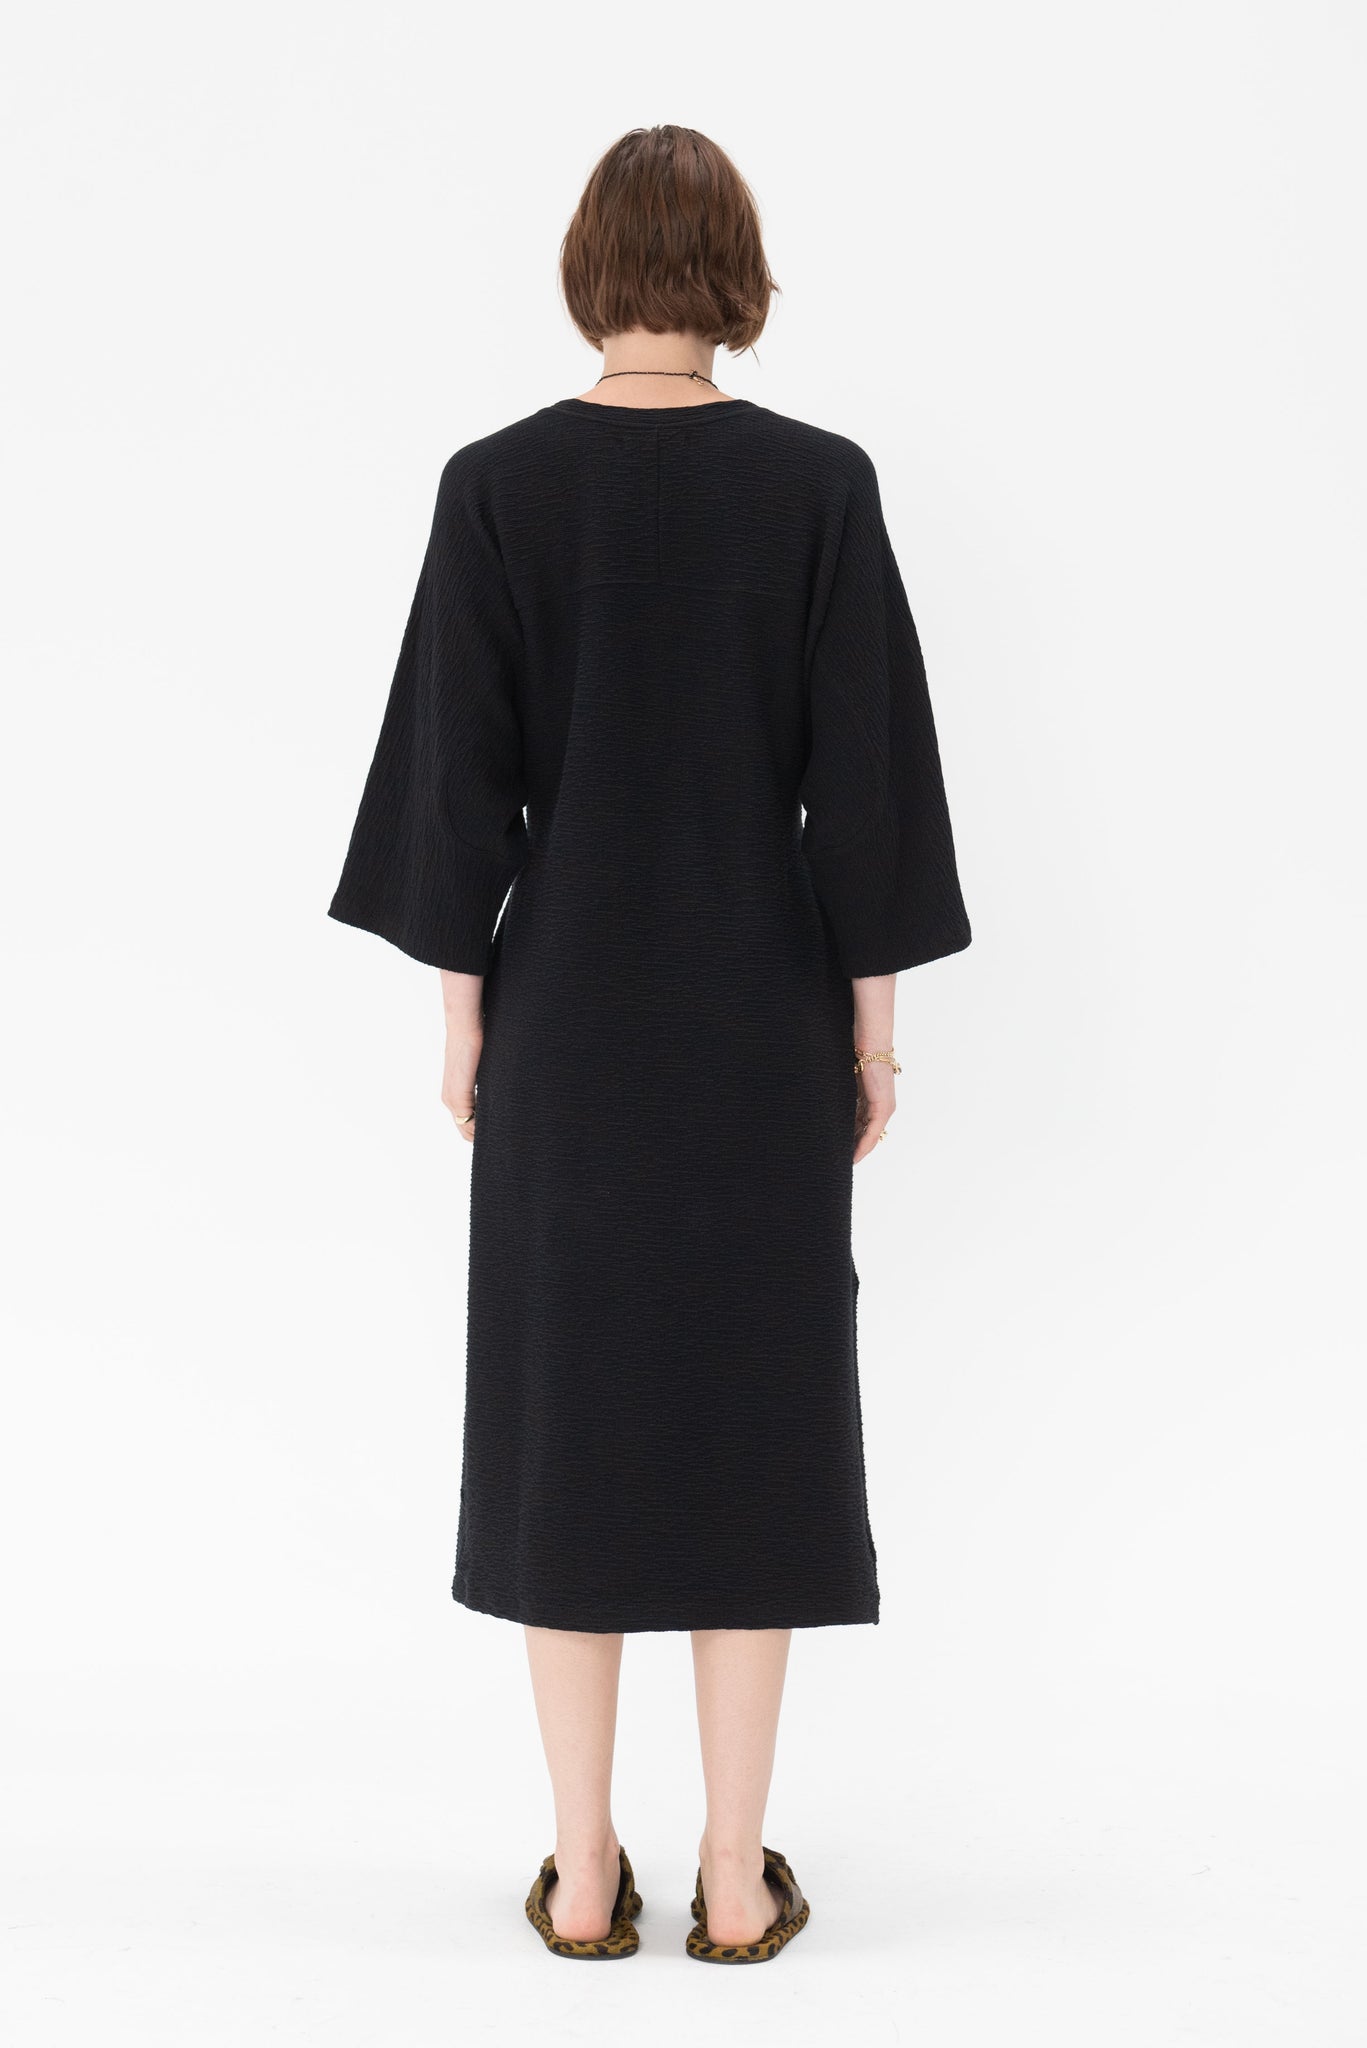 HENRIK VIBSKOV - Transfer Jersey Dress, Black